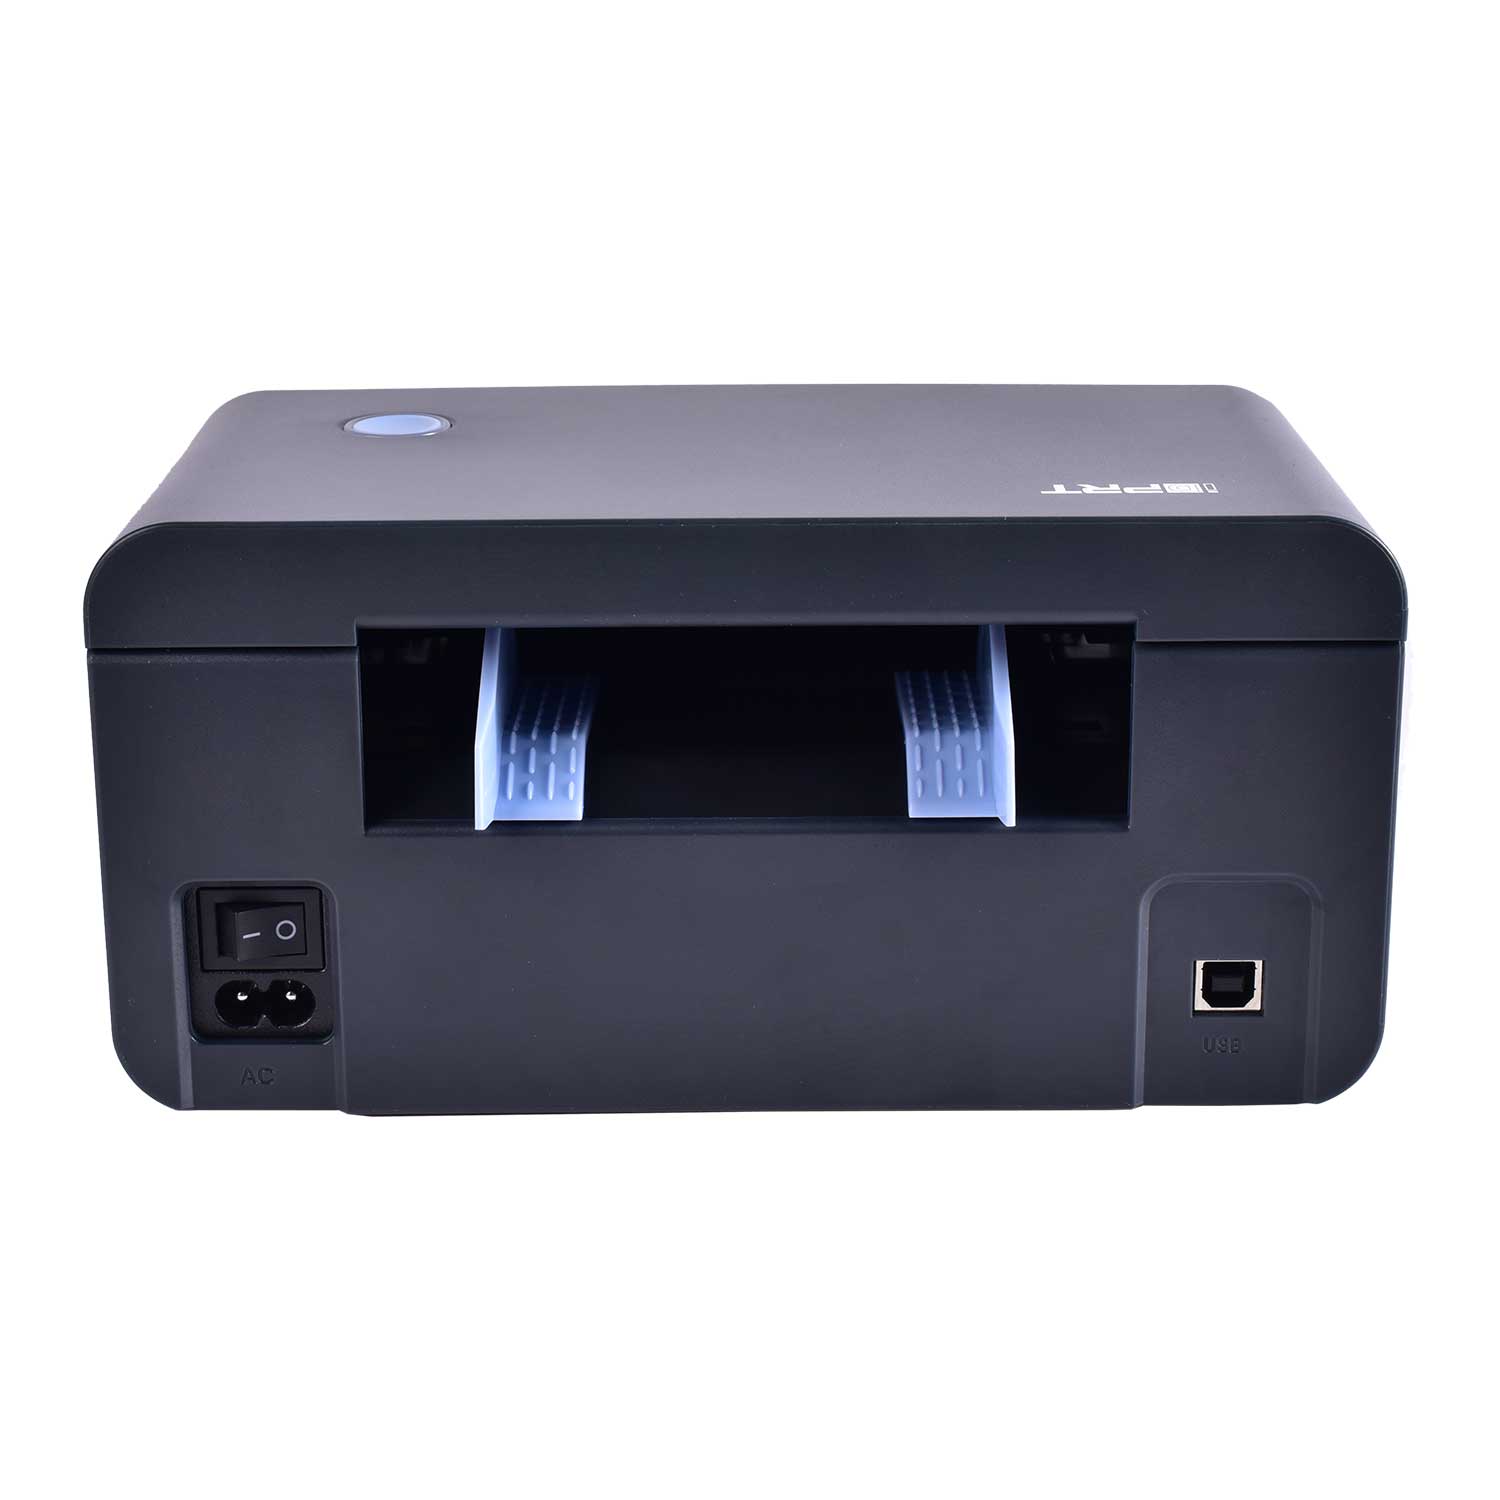 iDPRT SP410 thermal label printer